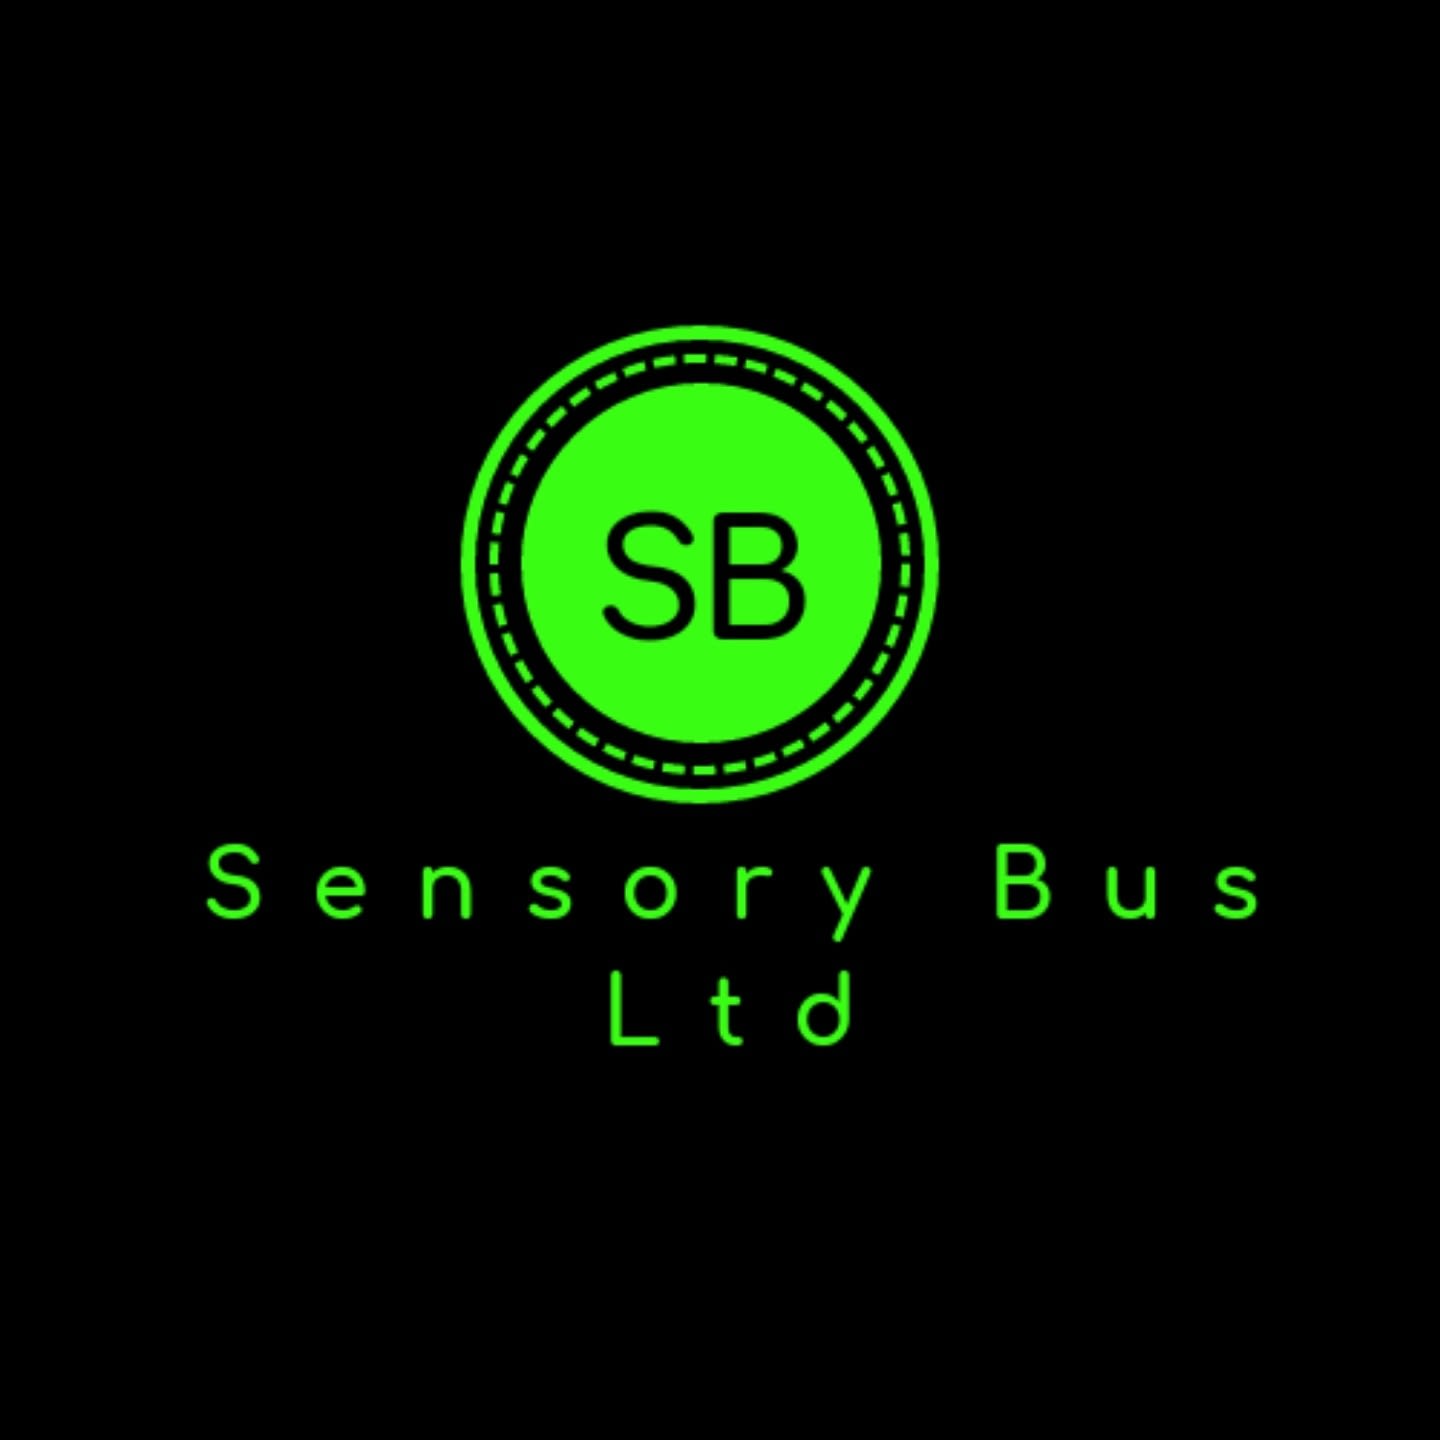 Sensory Bus Ltd